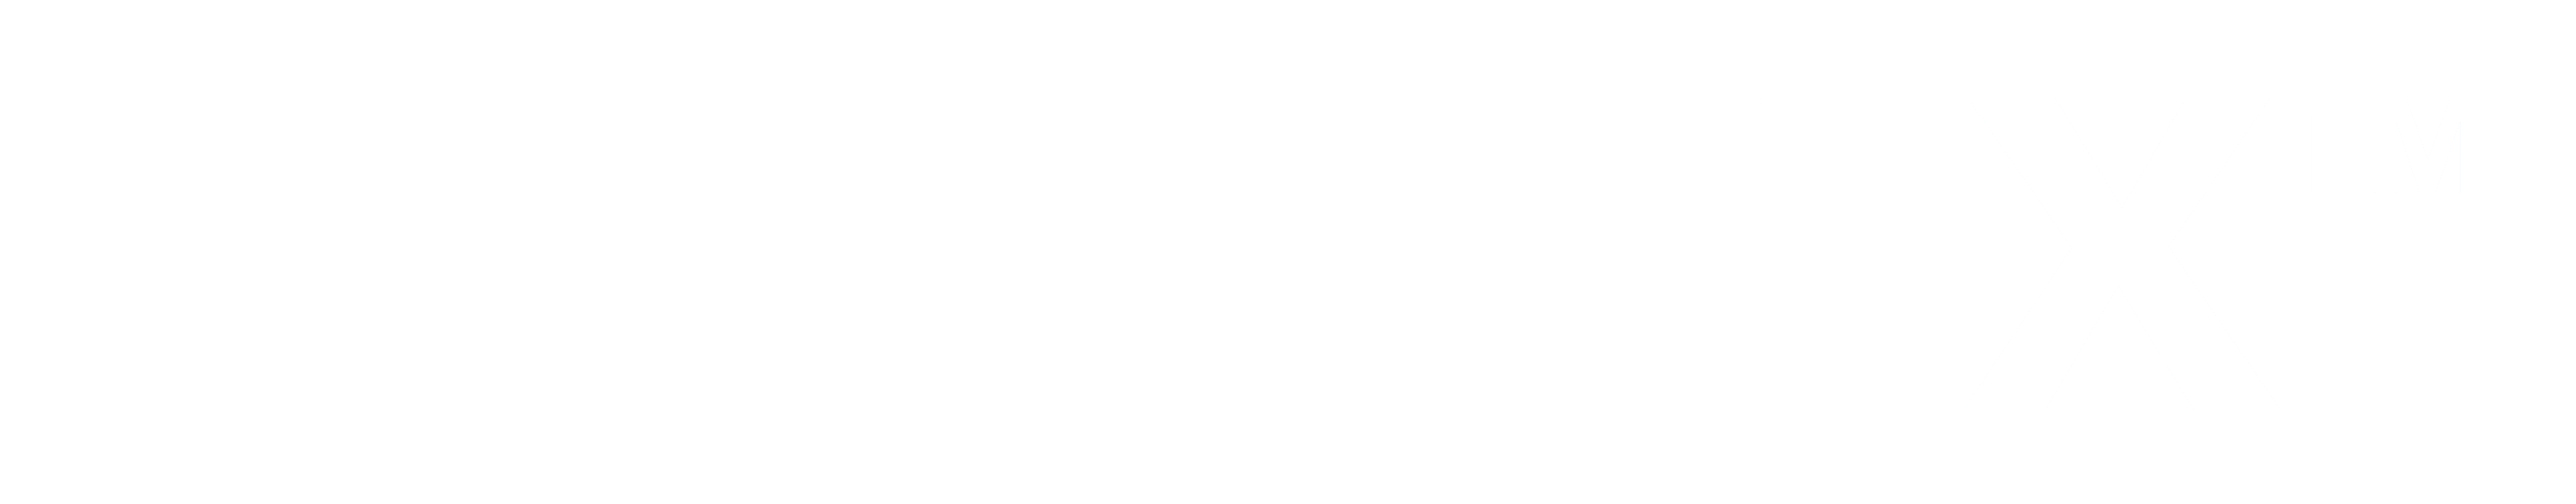 WordLX Logo